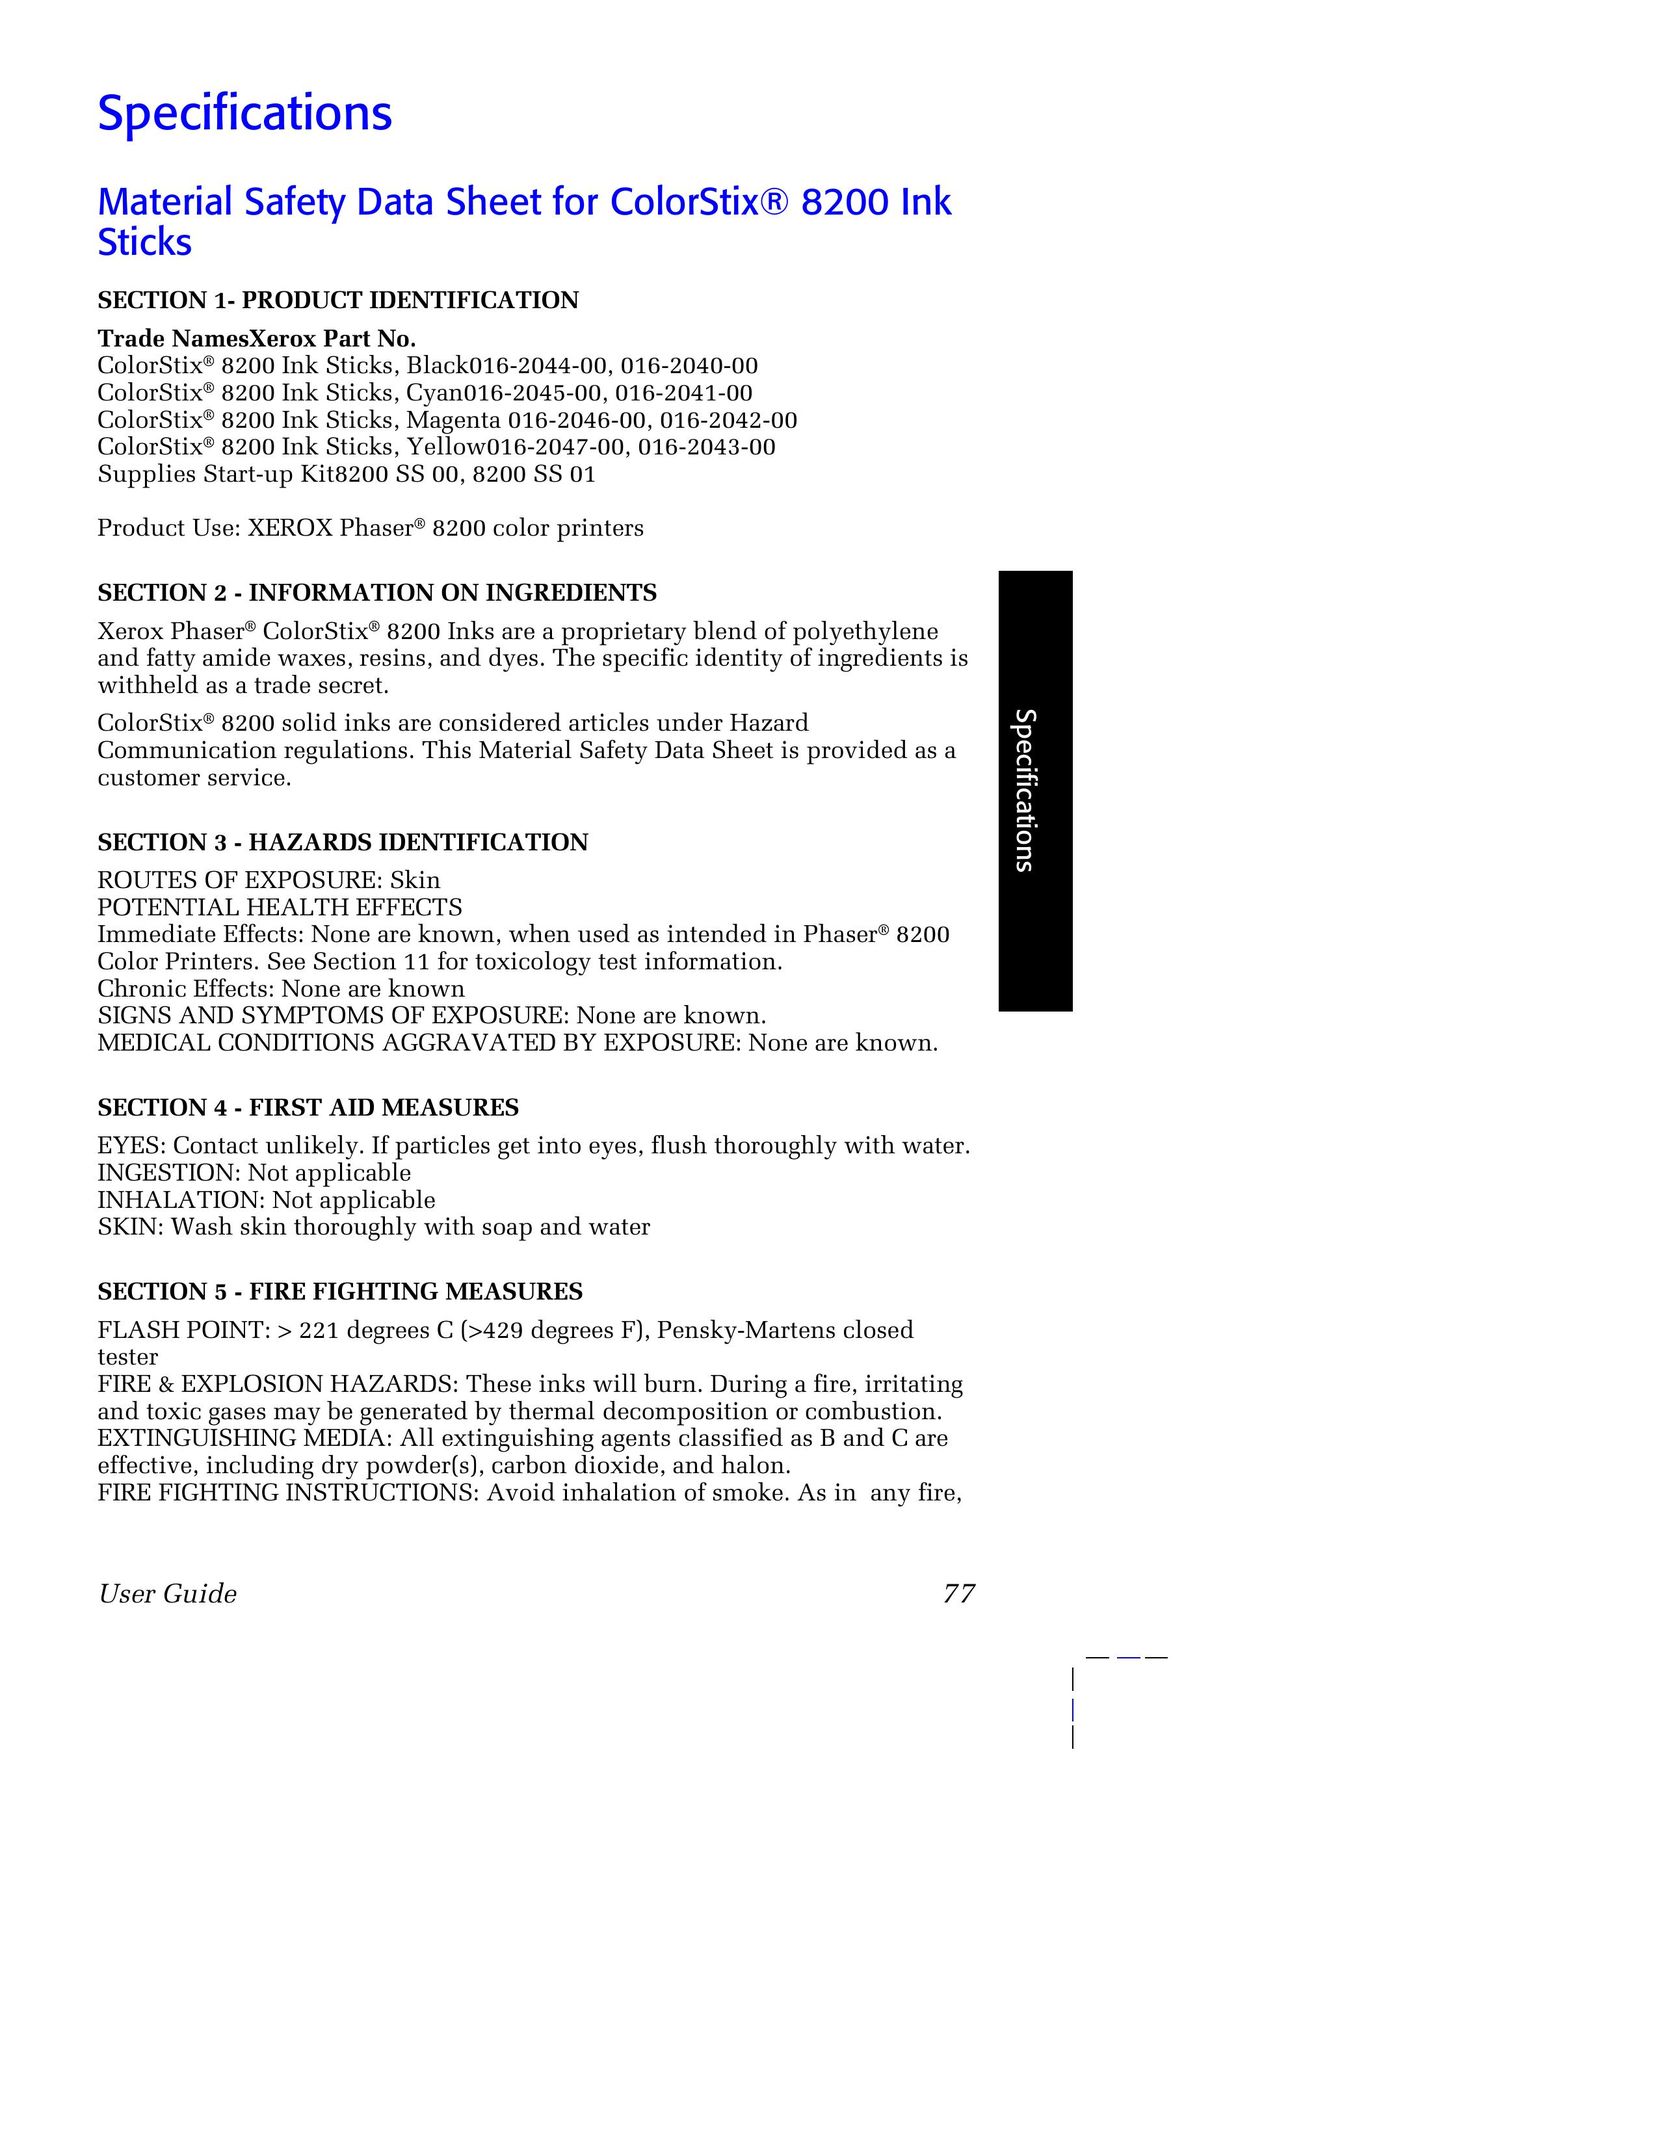 Xerox 016-2042-00 Printer Accessories User Manual